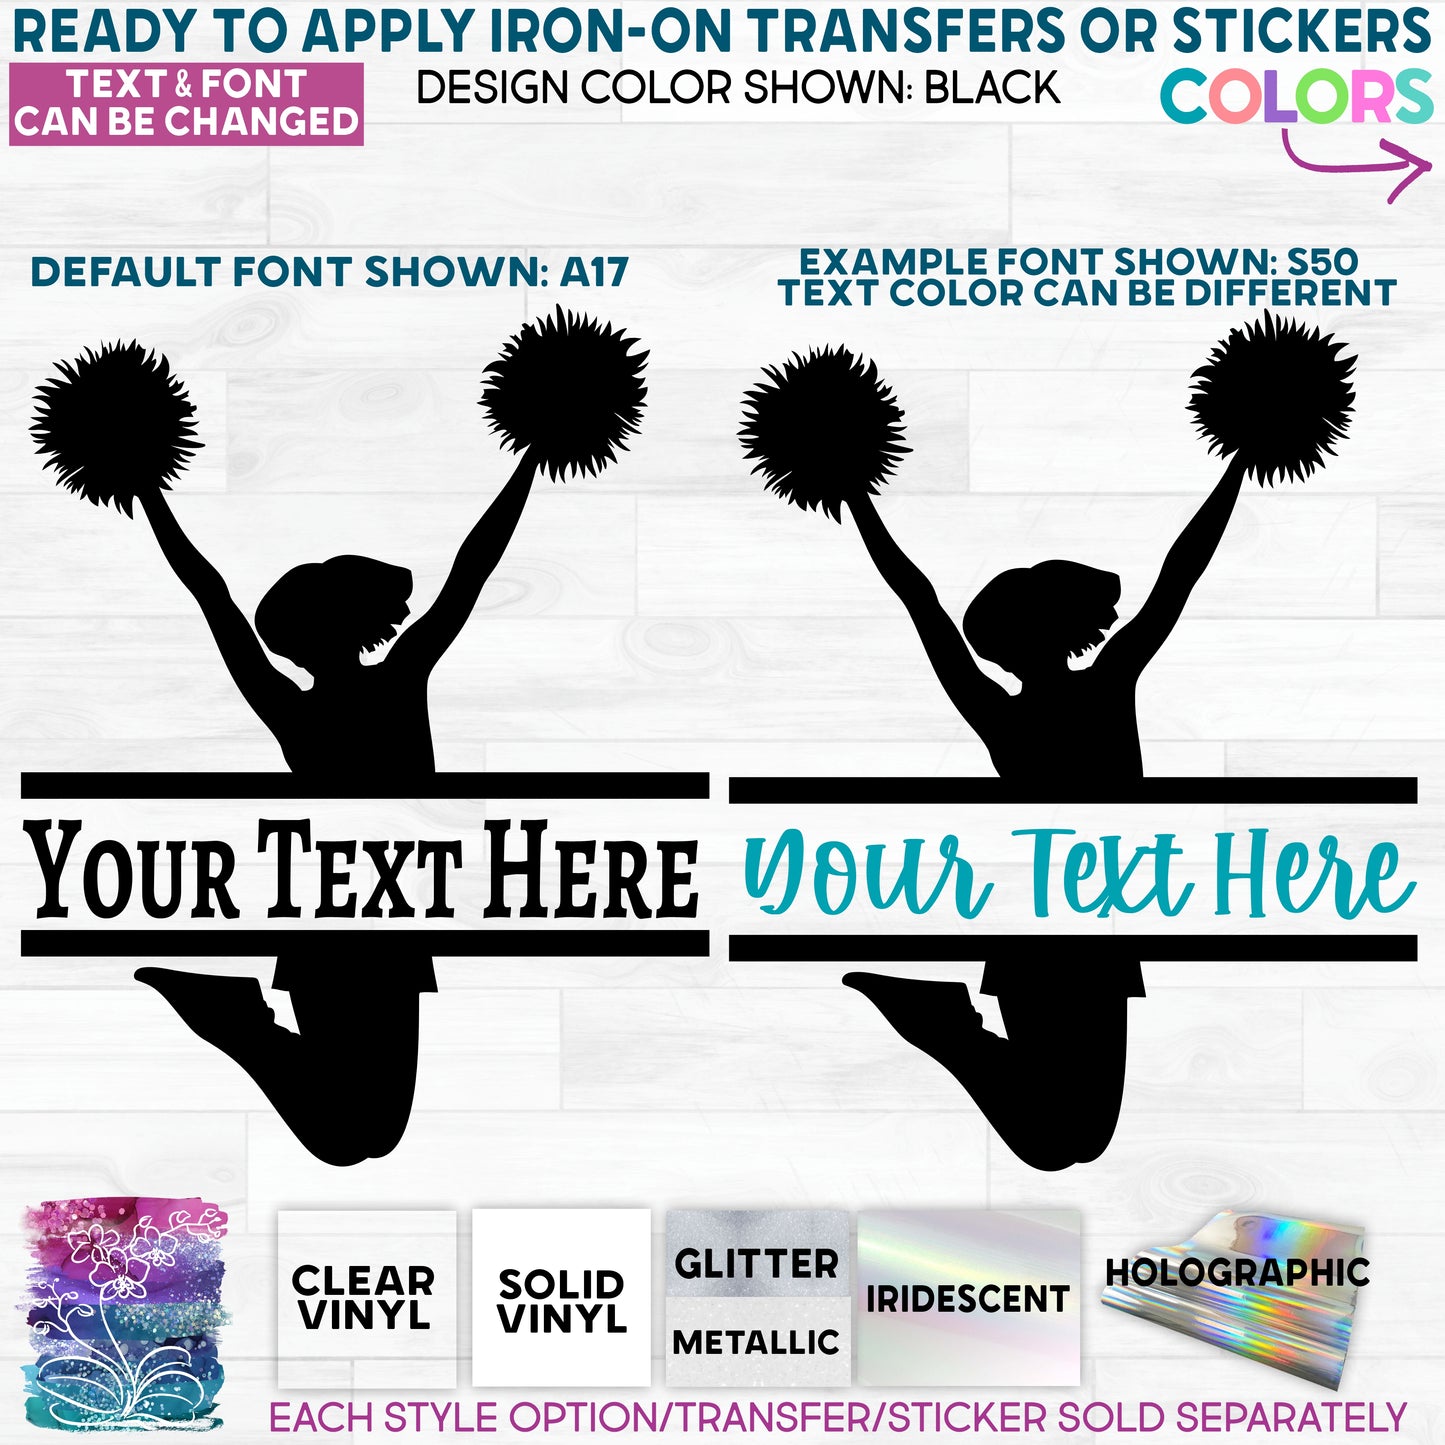 (s140-2P) Cheer Cheerleader Split Text Name Glitter or Vinyl Iron-On Transfer or Sticker